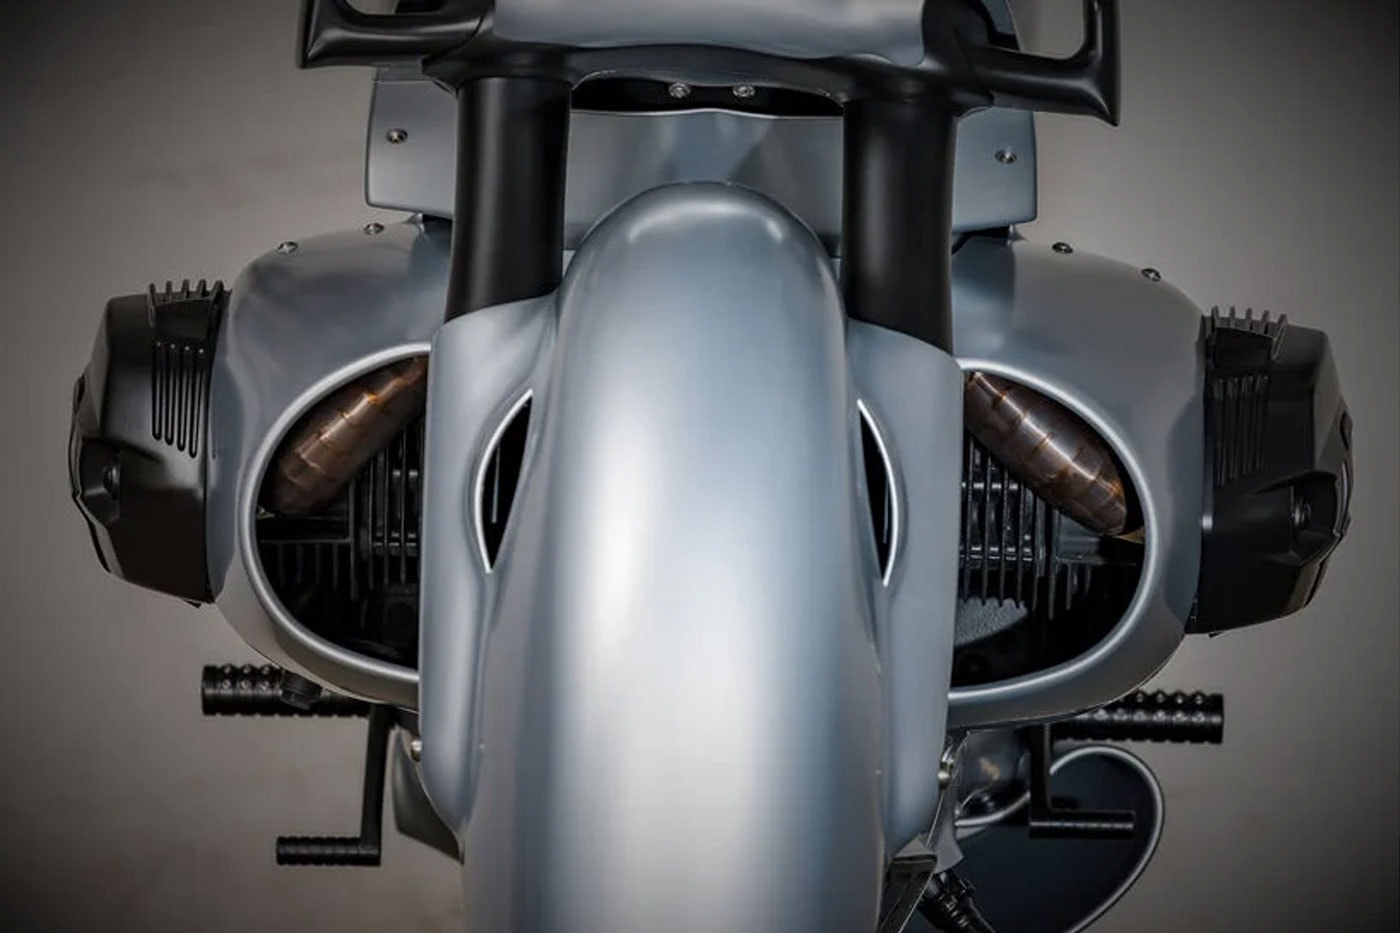 BMW R nineT FMC fabman creations motorbike aluminum body bike shell smooth silver custom images info wayne buys storm